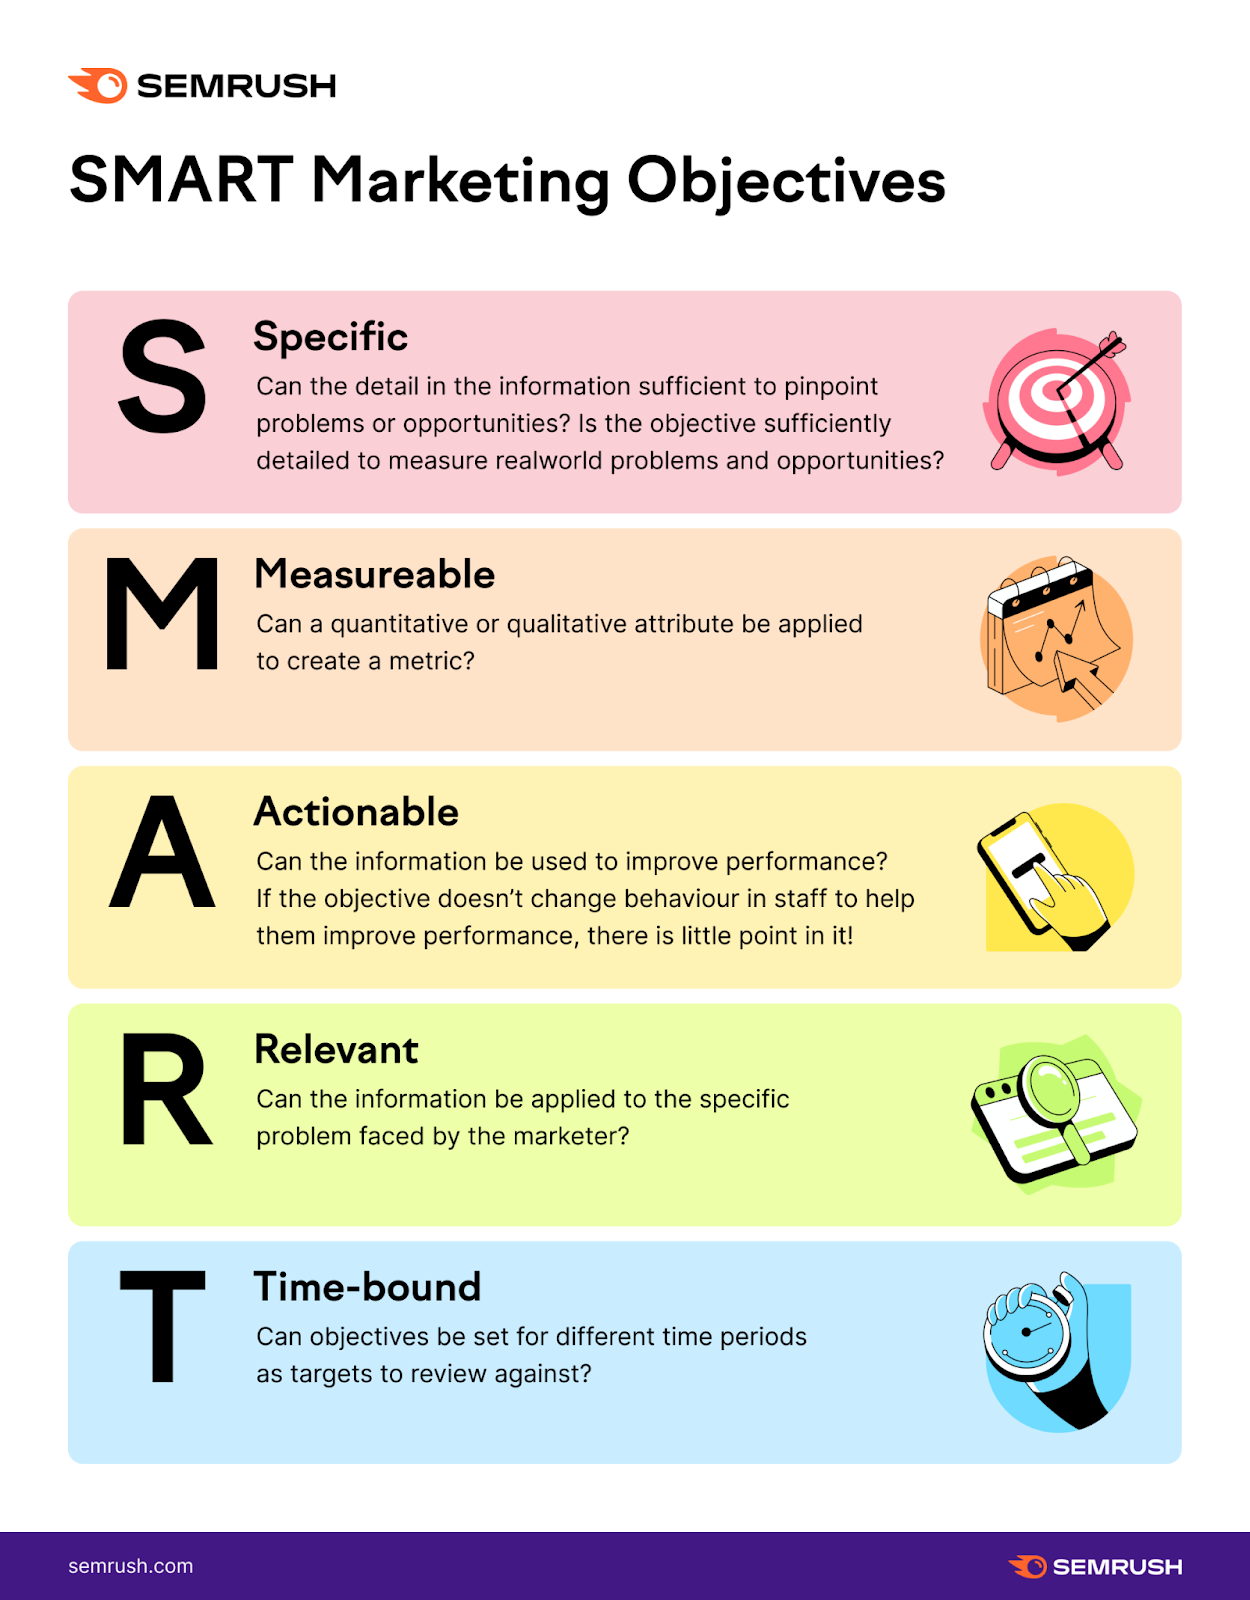 SMART marketing objectives